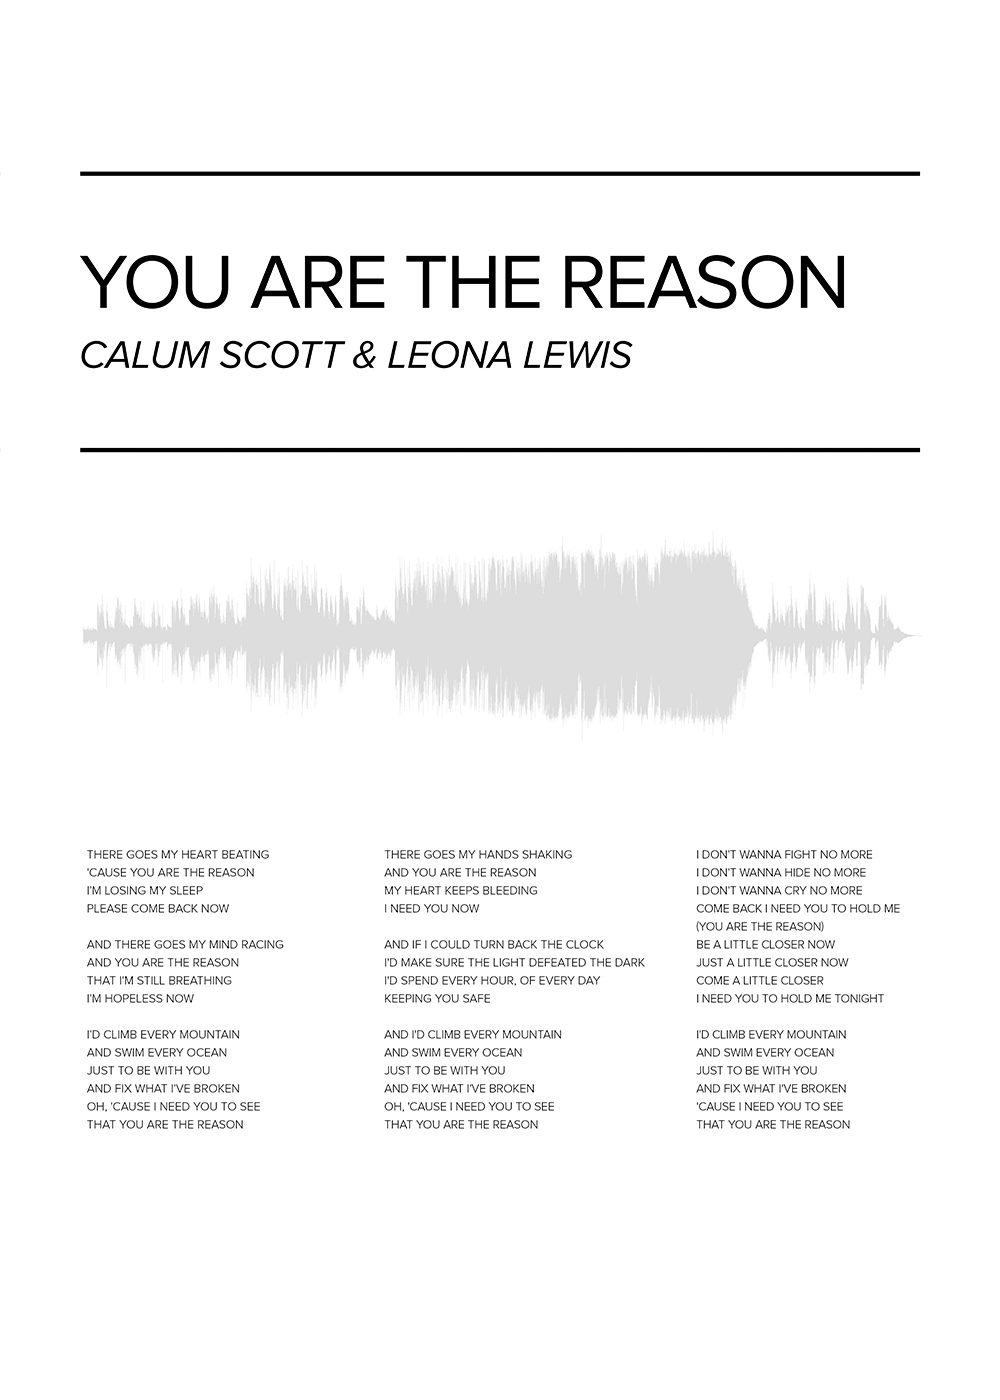 Calum Scott, Leona Lewis - You Are The Reason Poster